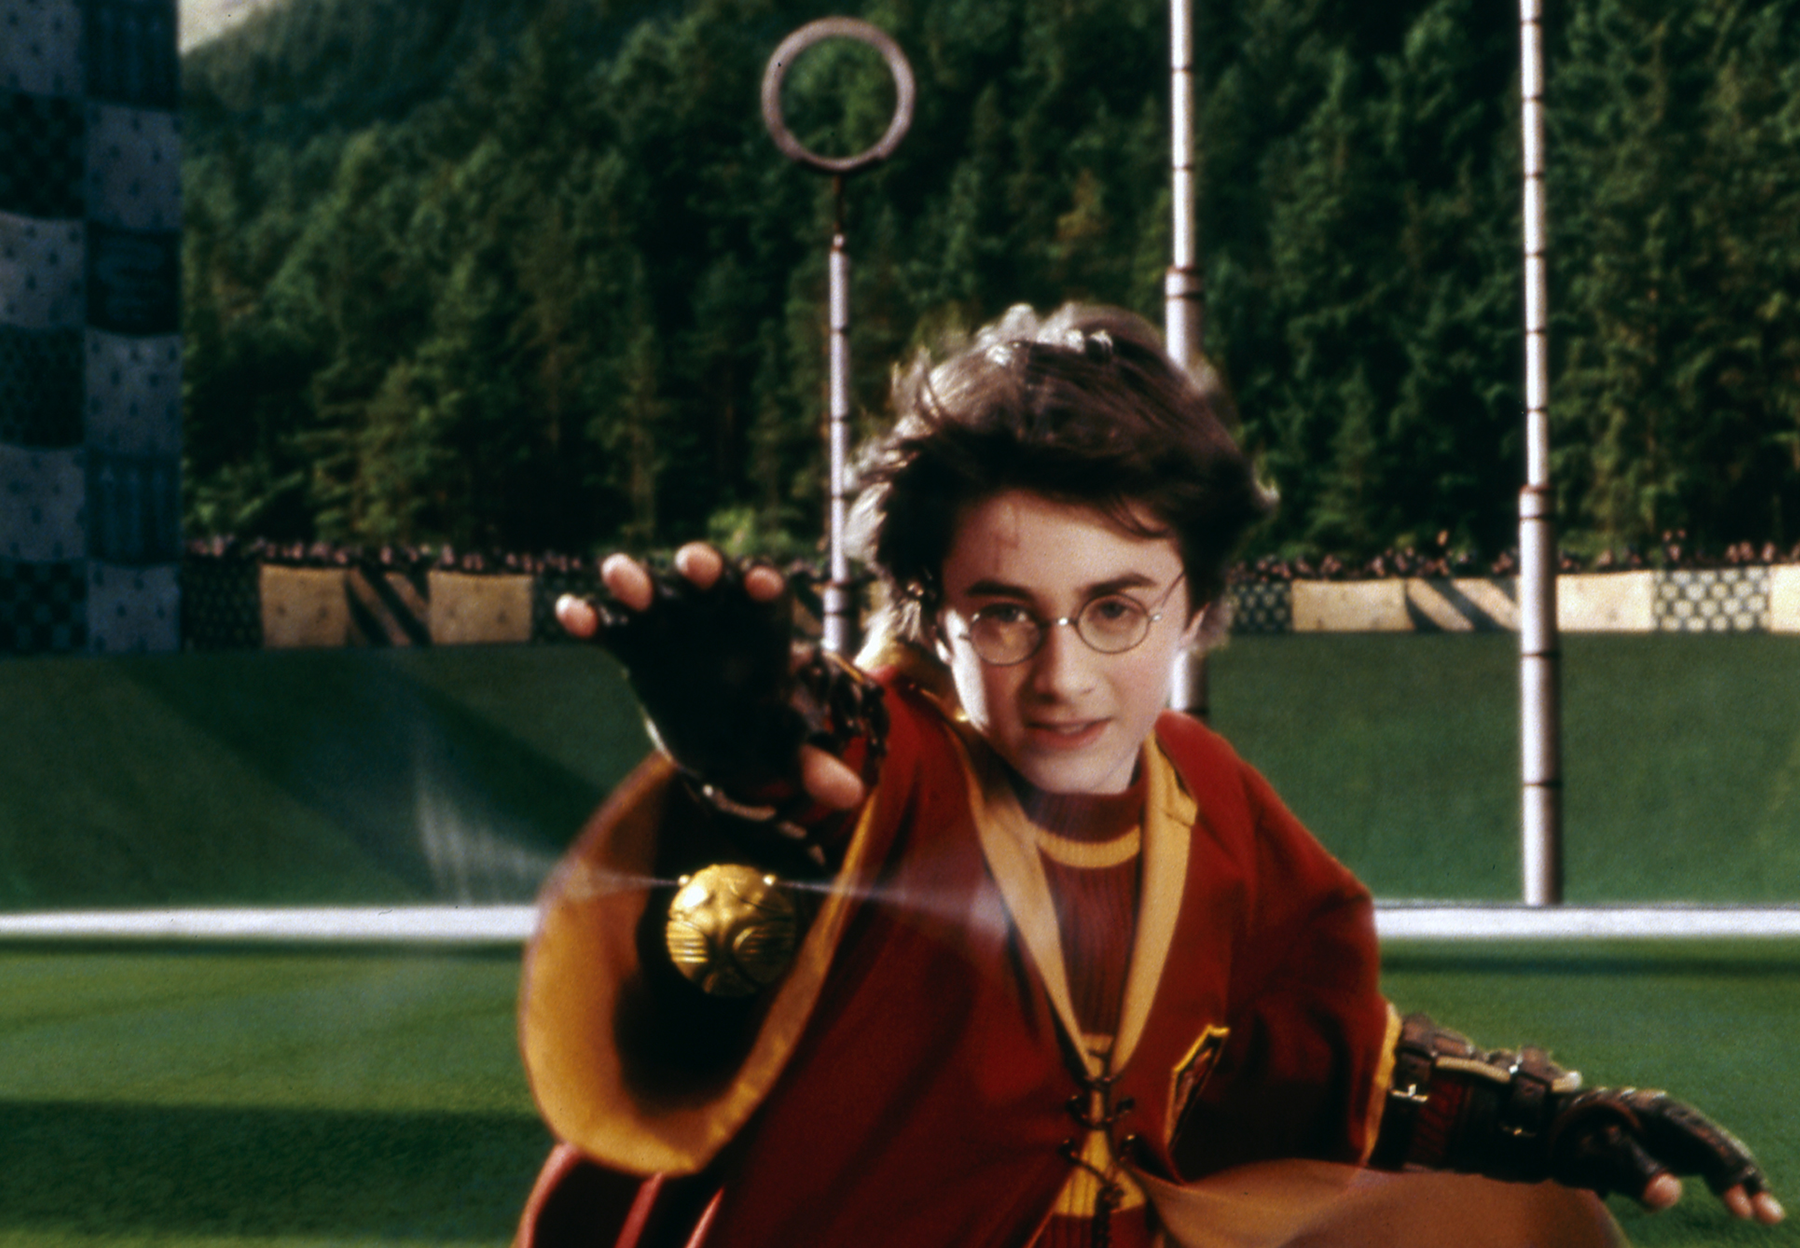 Golden Snitch - Harry Potter